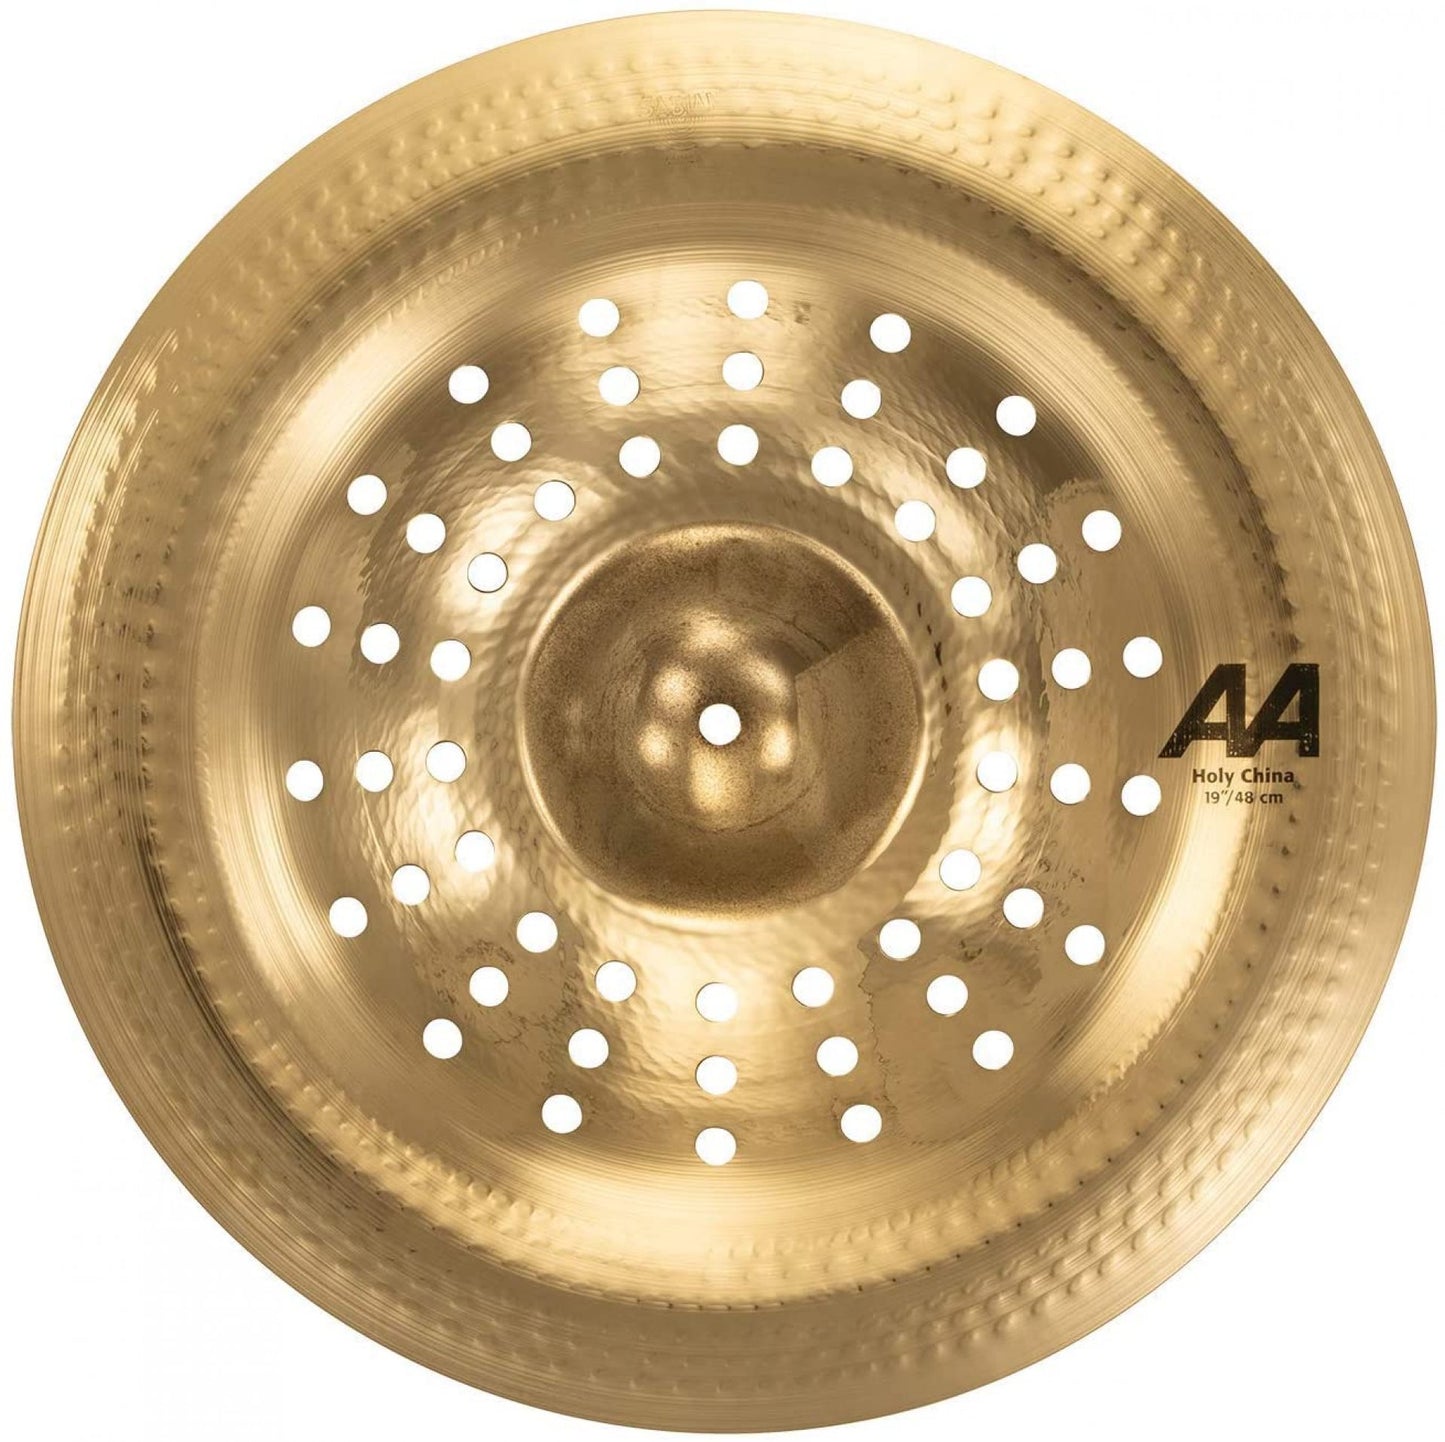 Sabian 21916CSB 19-inch AA Holy China Cymbal (Golden)